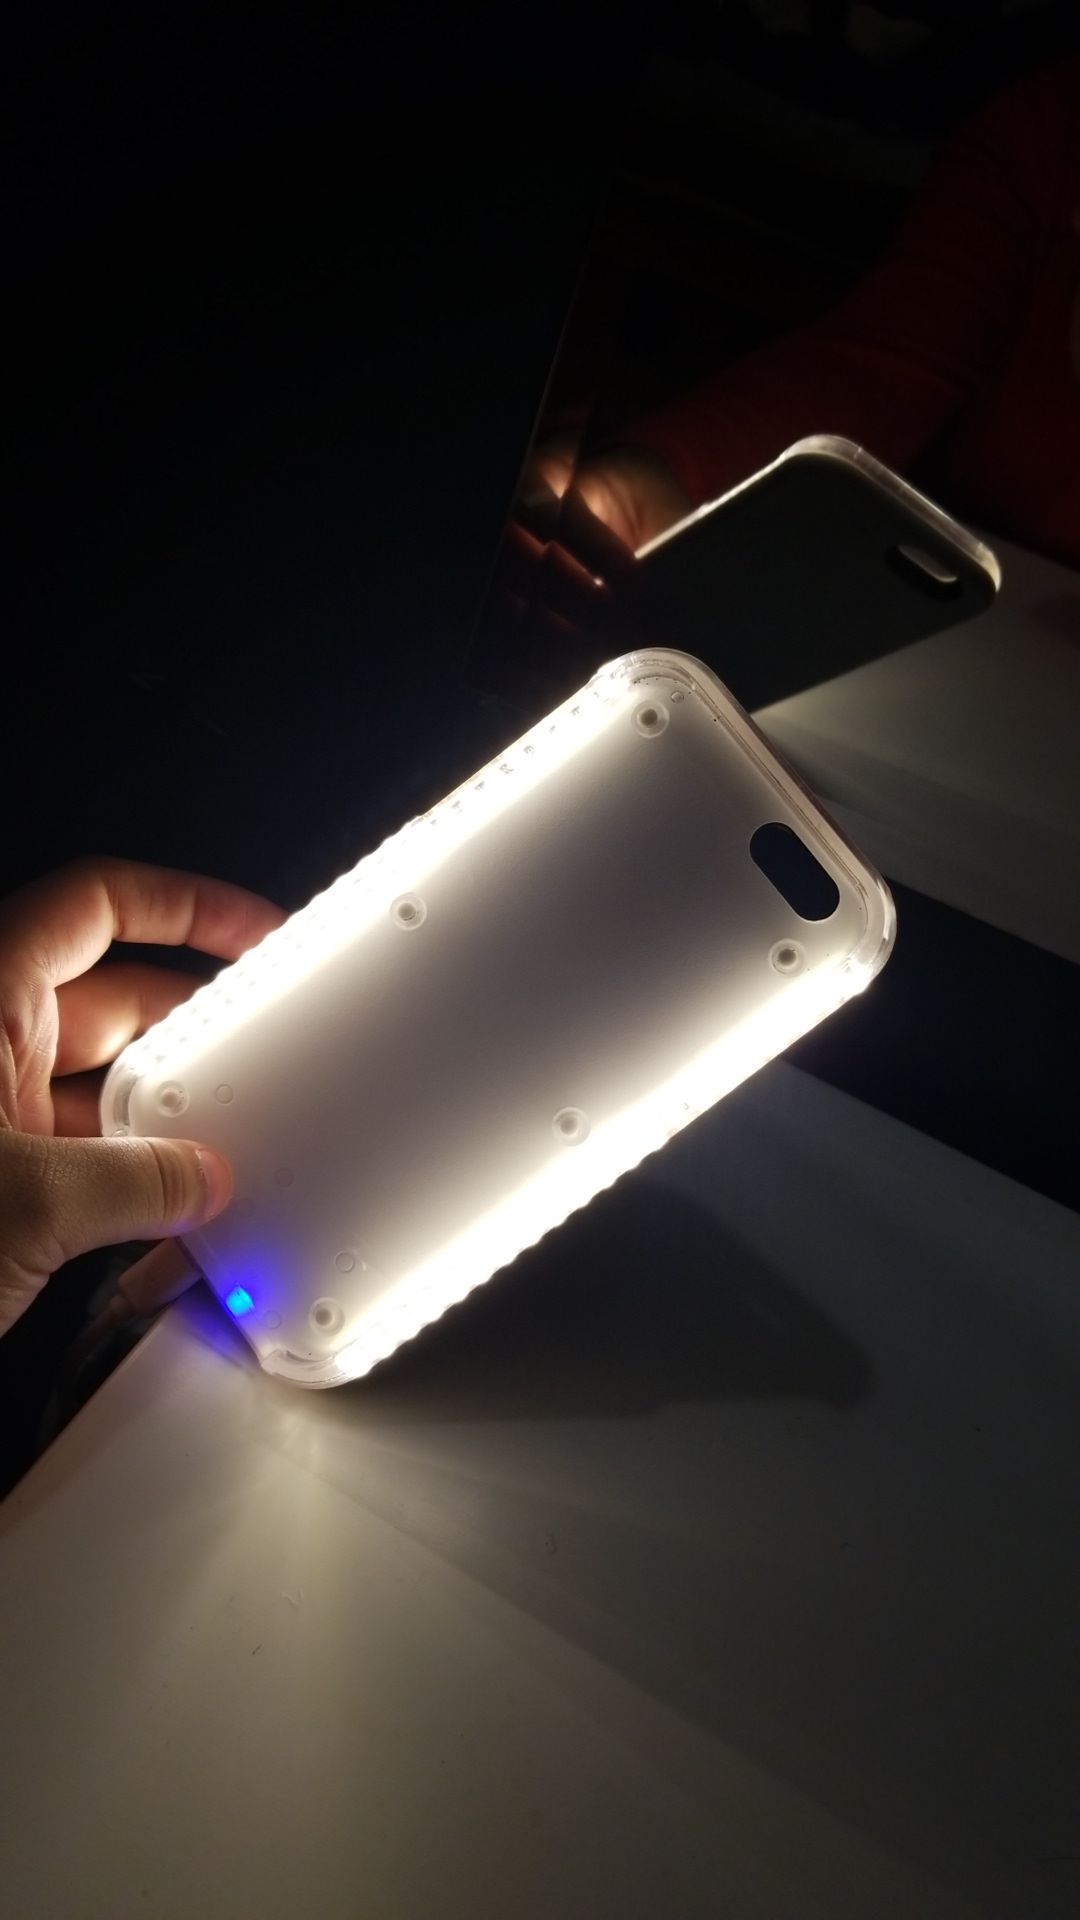 IPhone 6s lumee case lights up